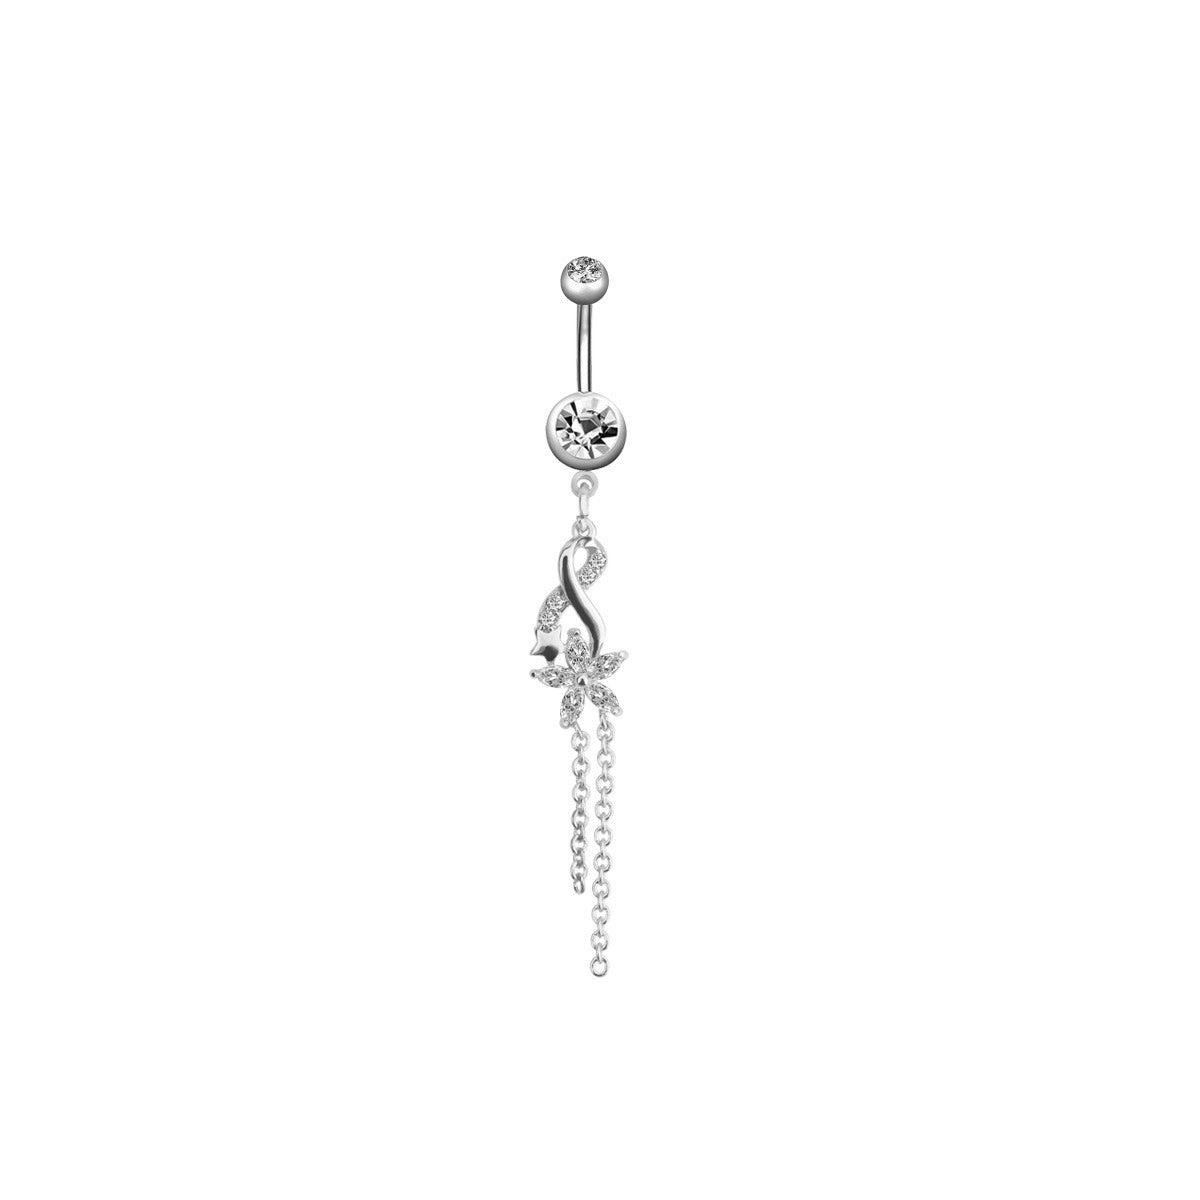 Zirconia flower chain necklace (steel 316L)